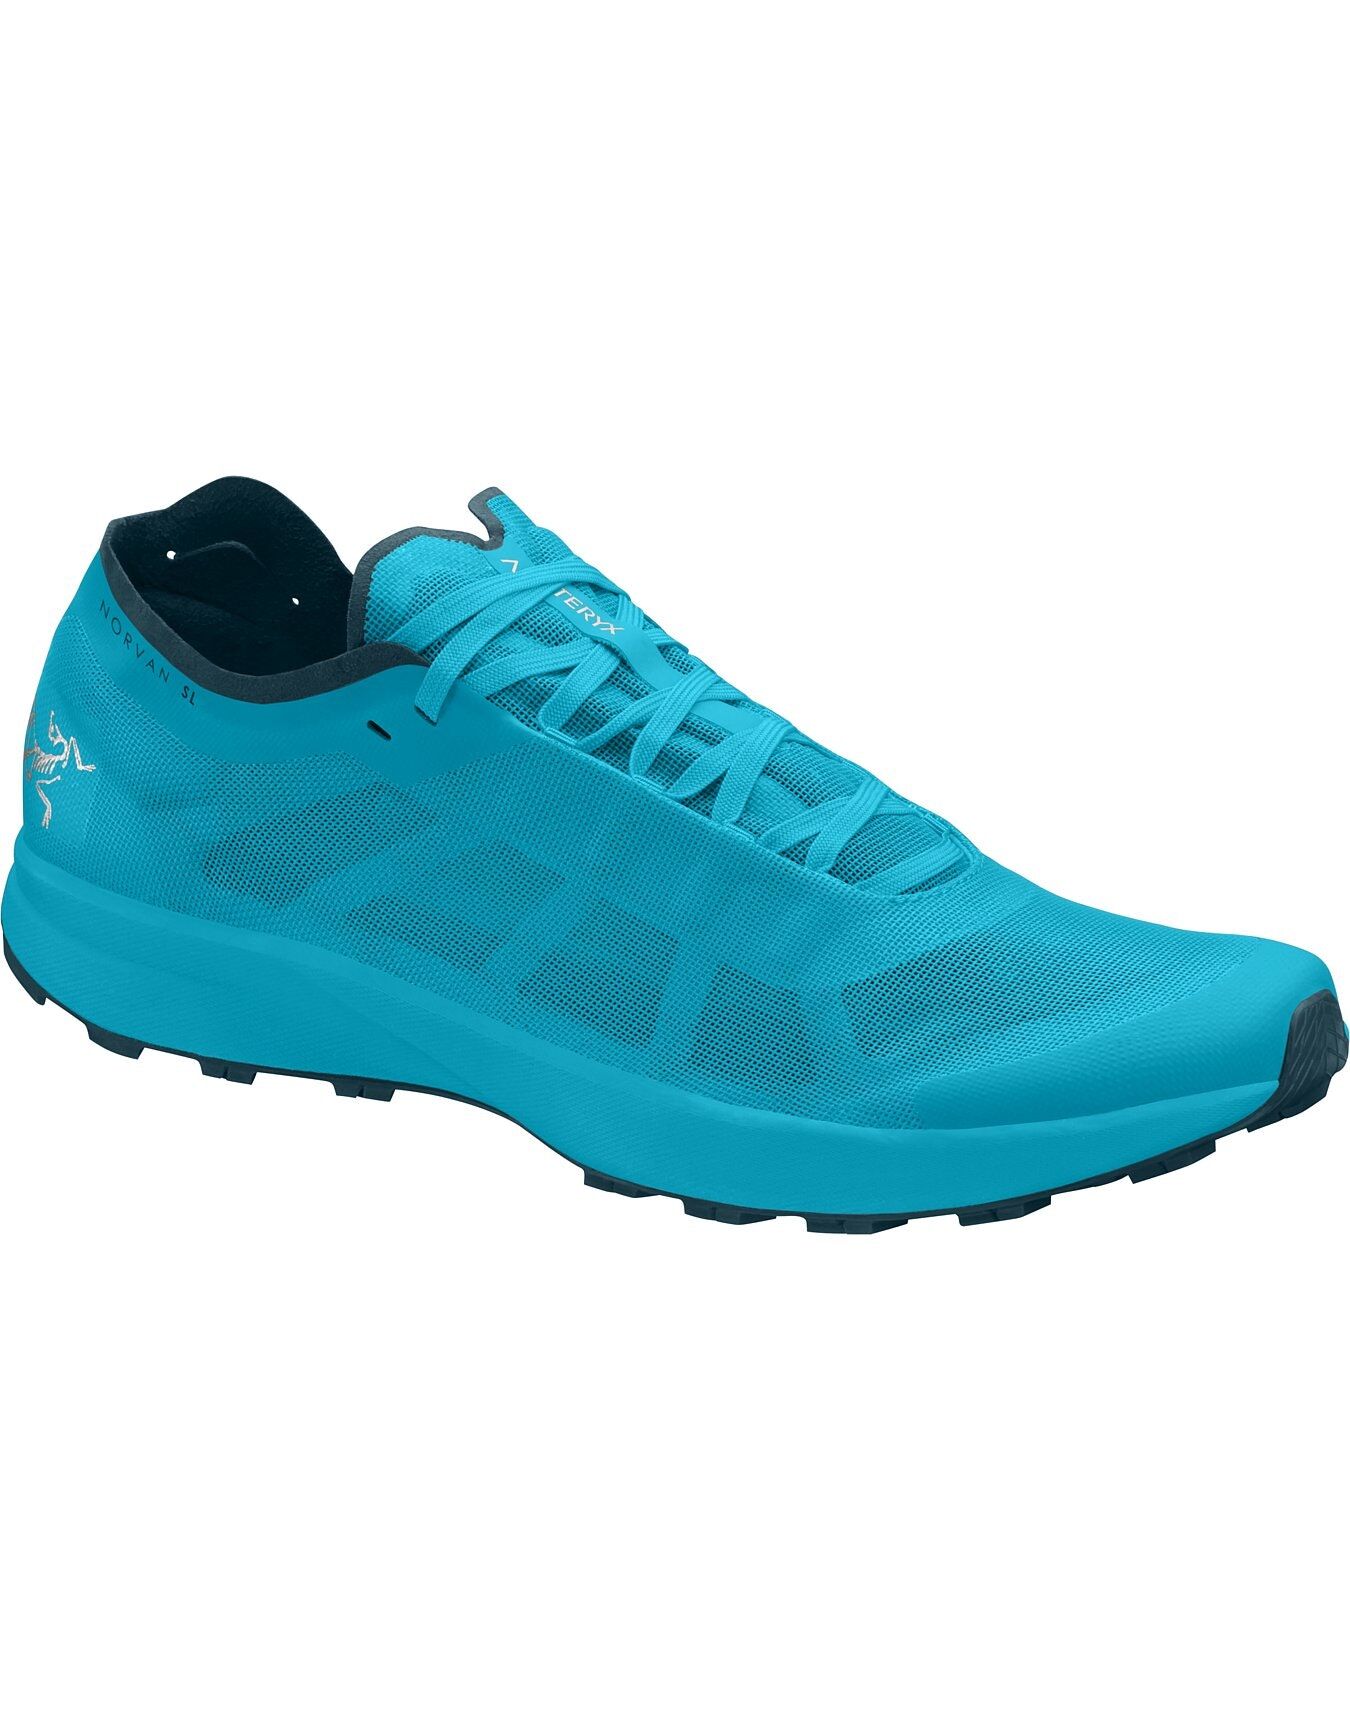 Arc'teryx NORVAN SL - Trail running shoes - Men's